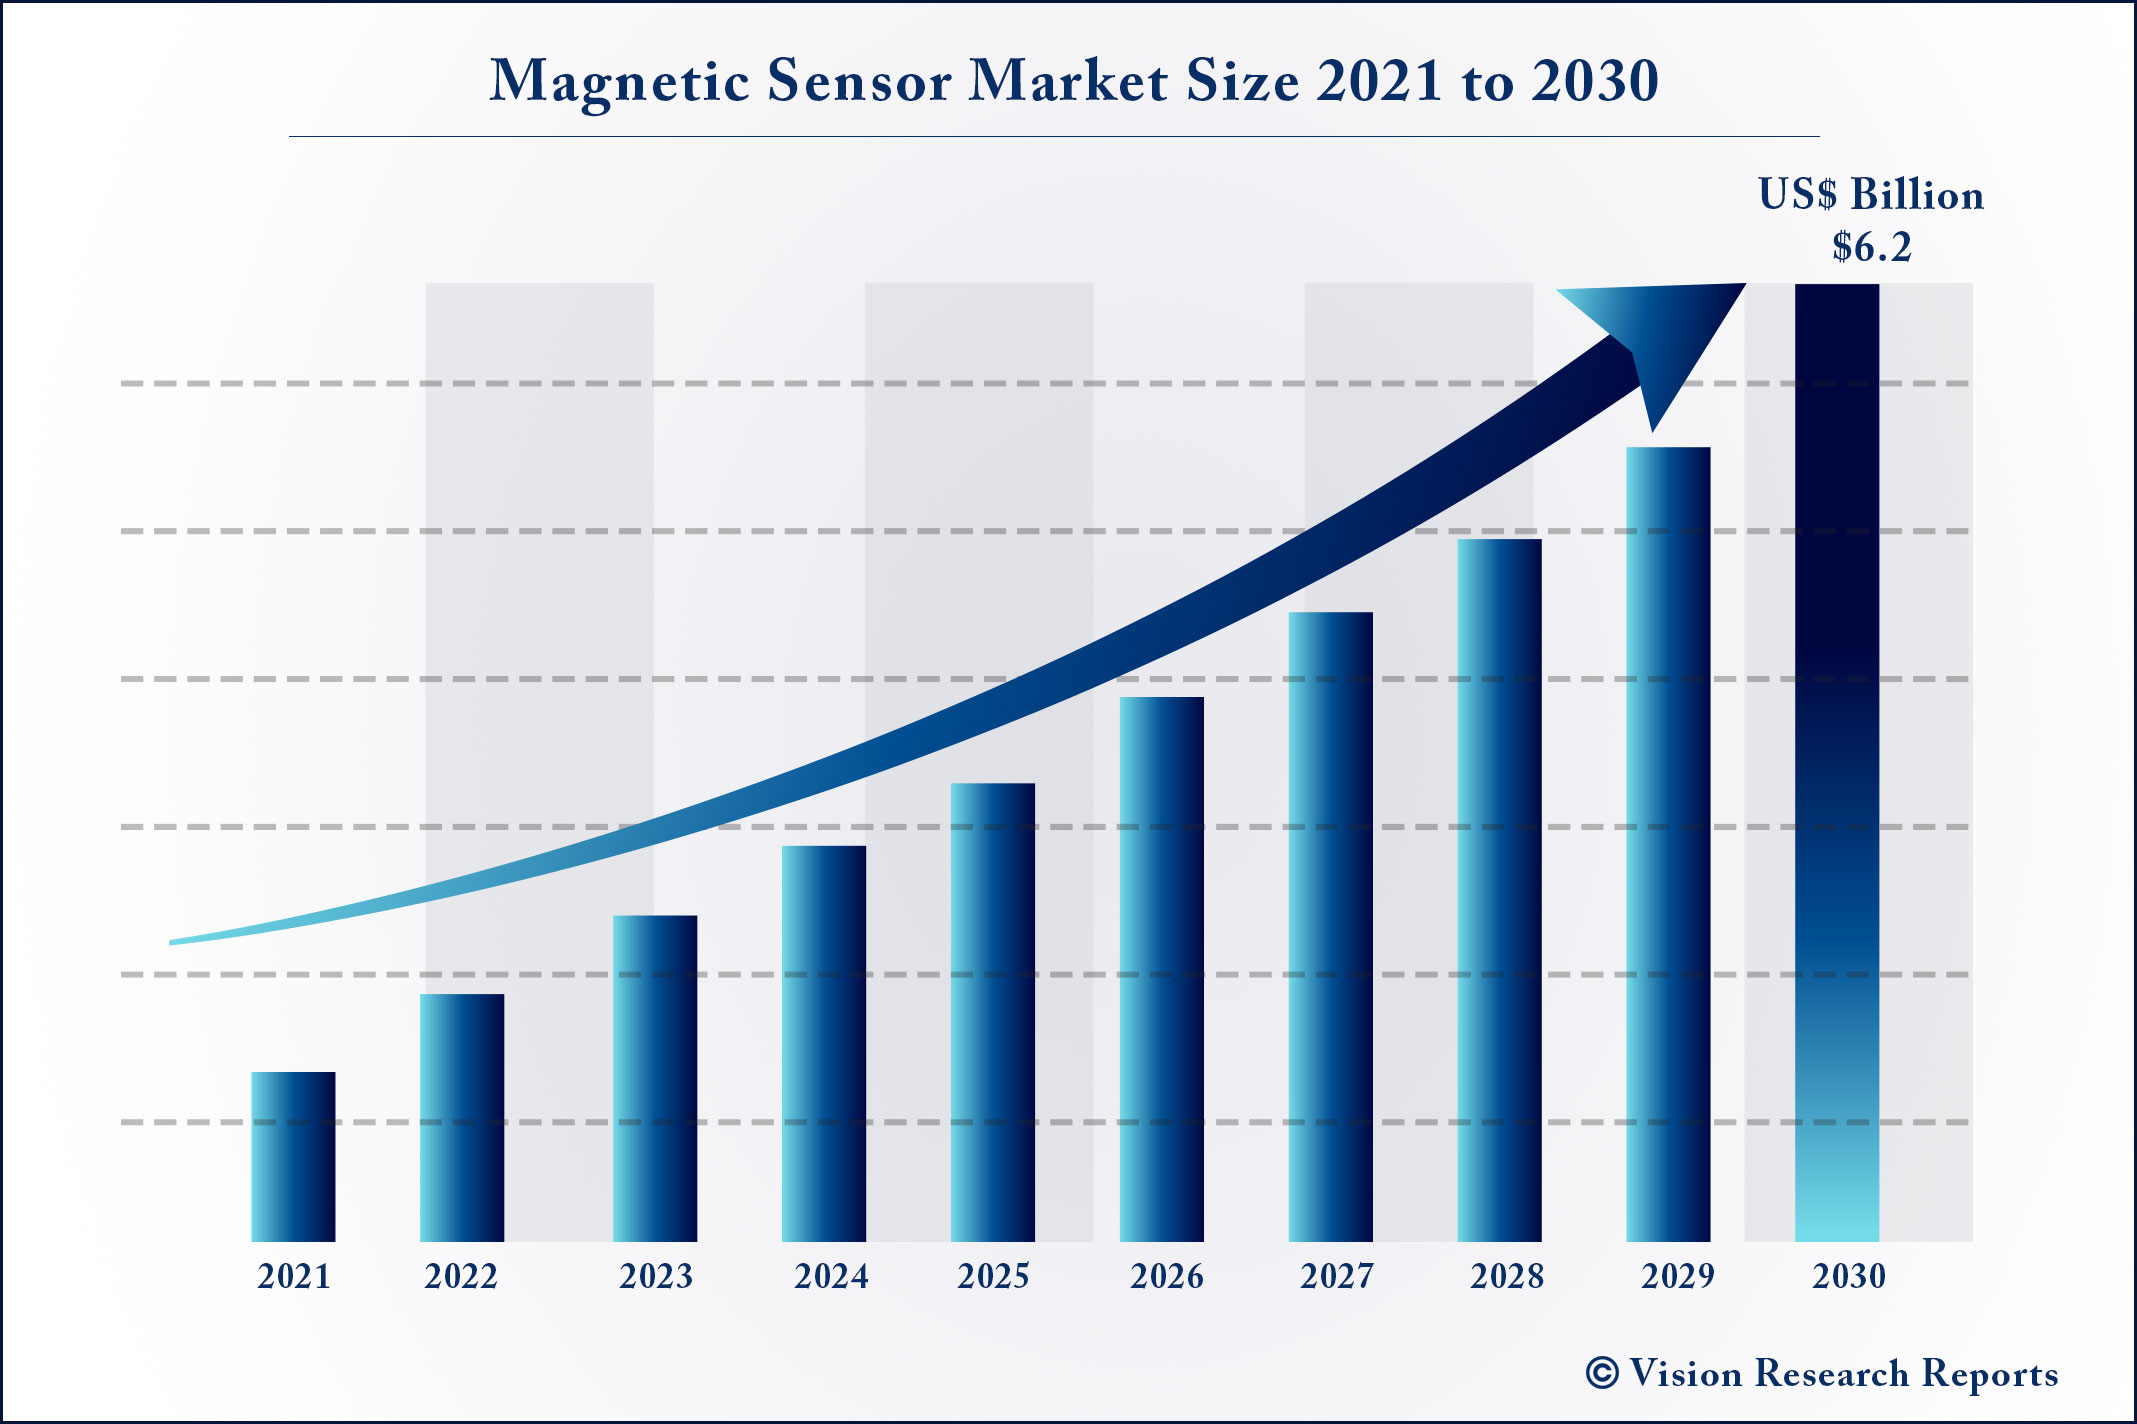 Magnetic Sensor Market Size 2021 to 2030